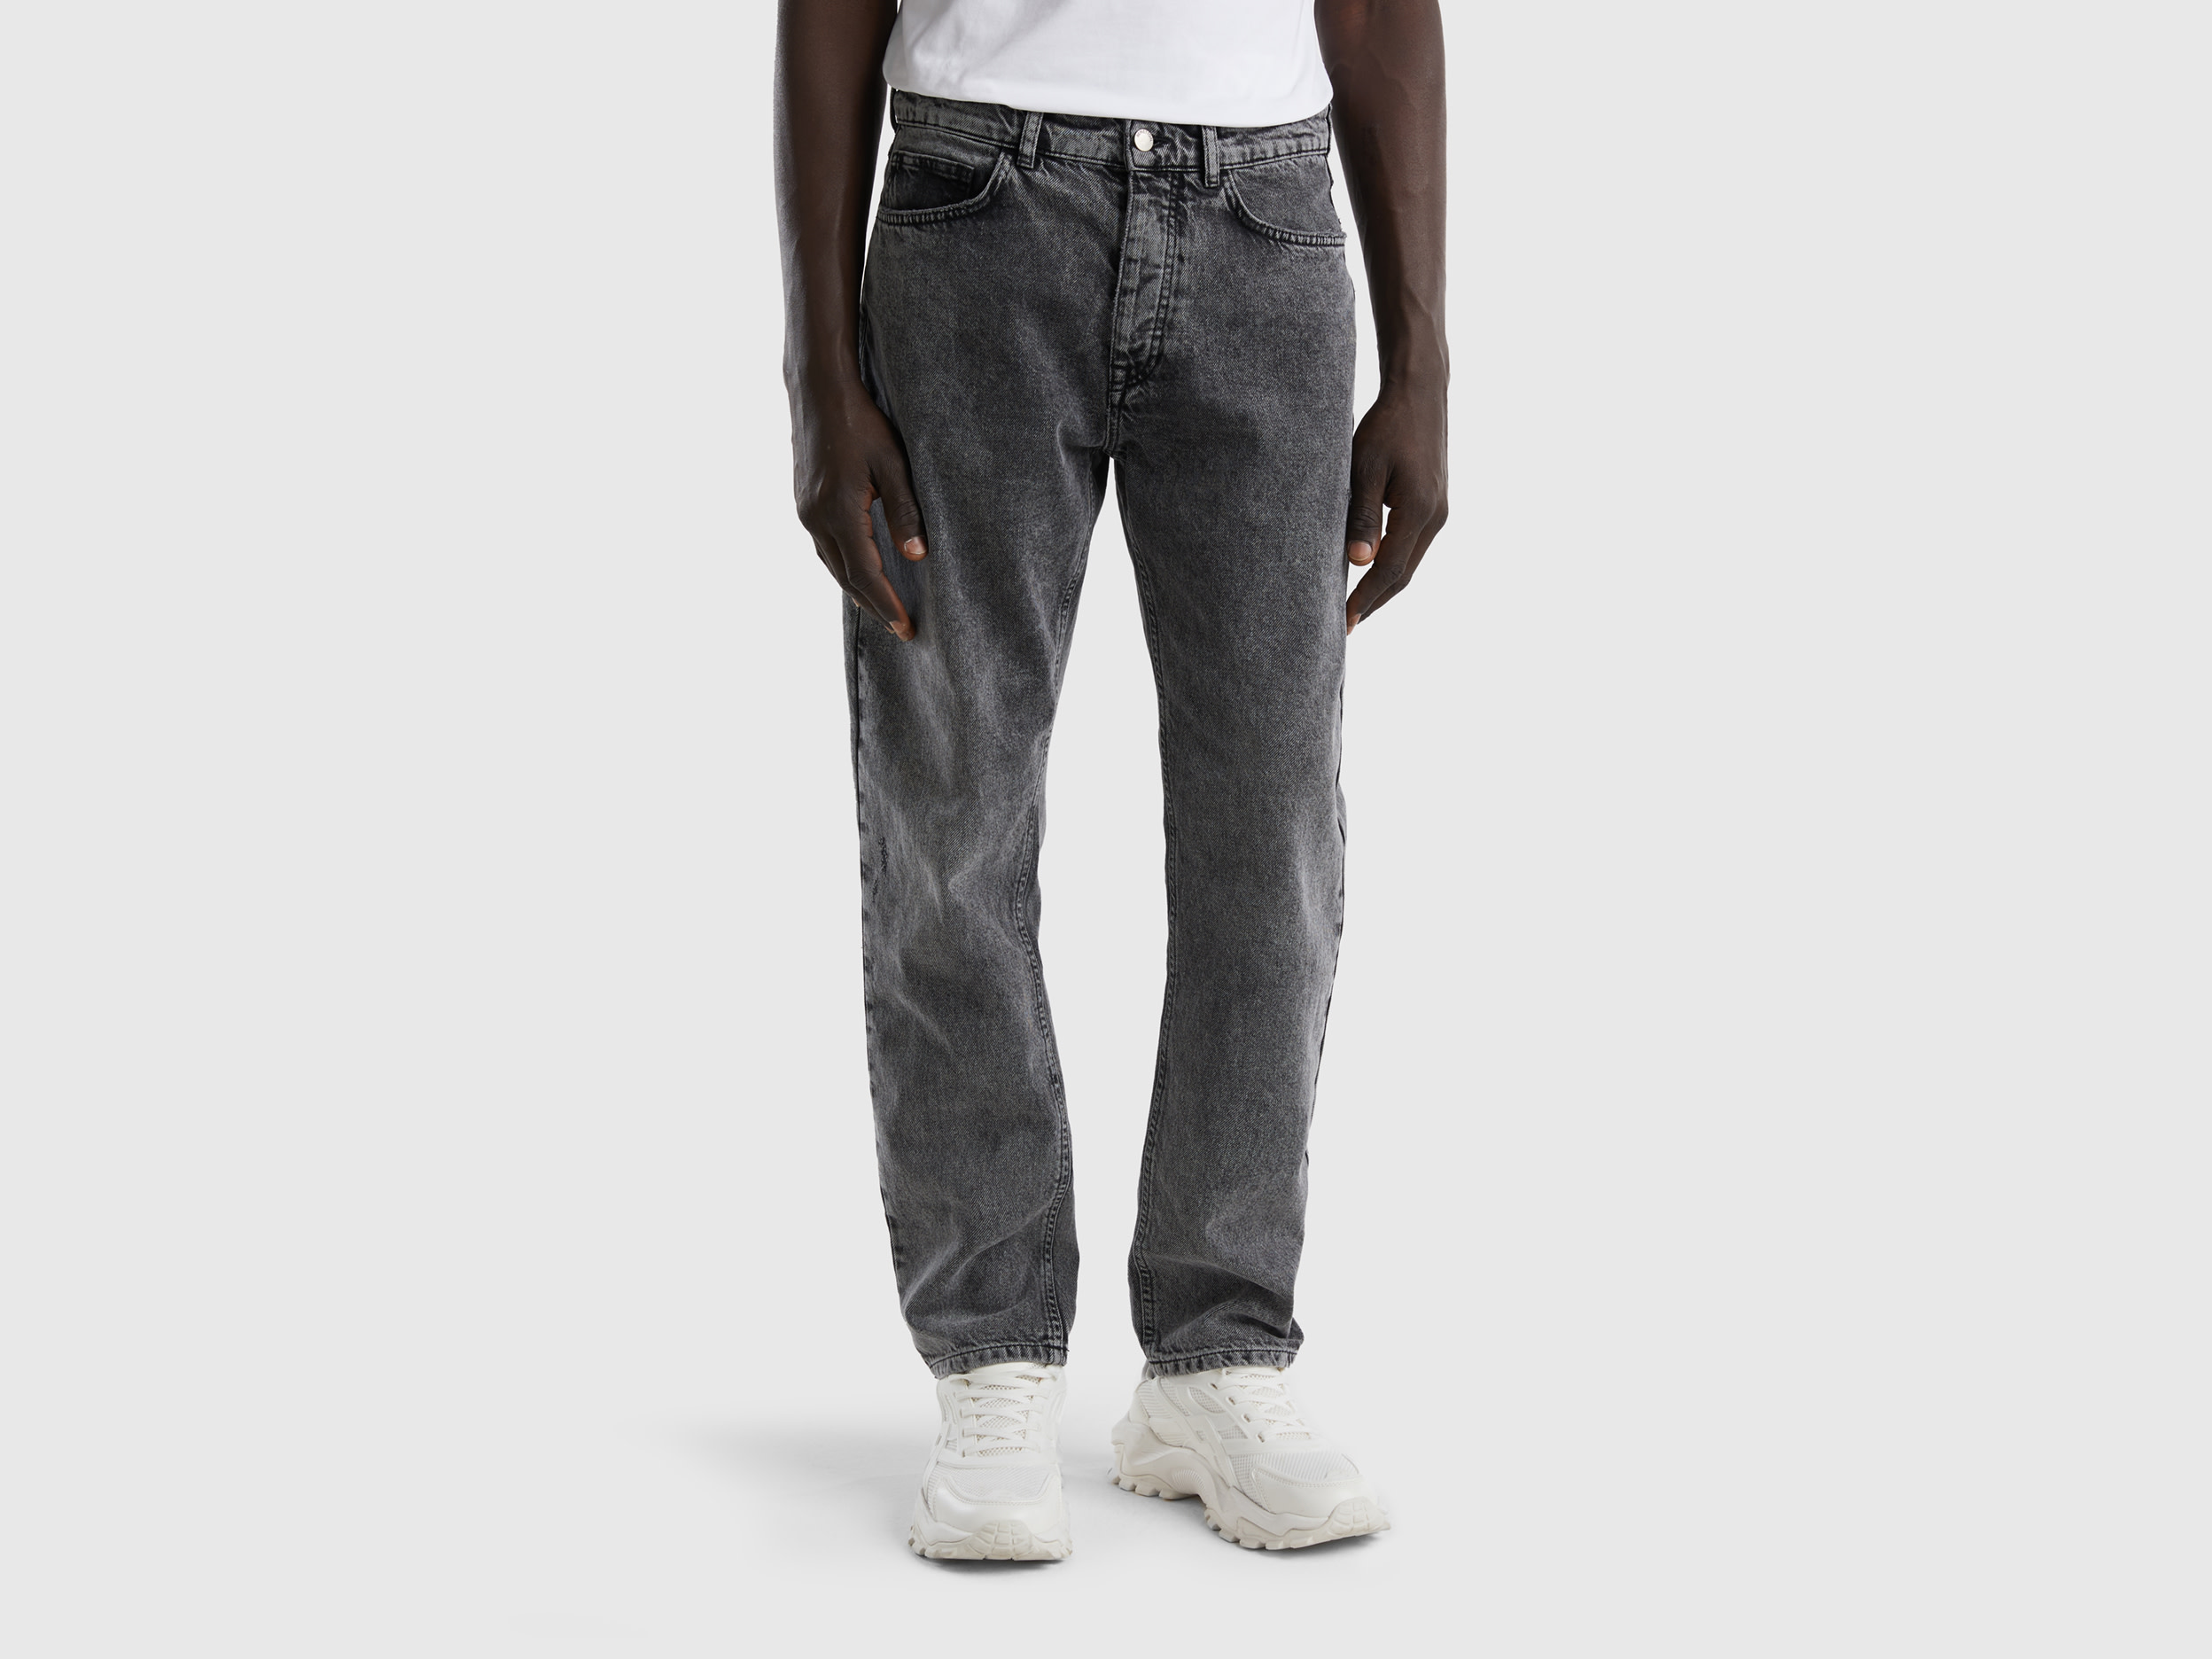 Benetton, Five-pocket Worn Look Jeans, size 36, Black, Men